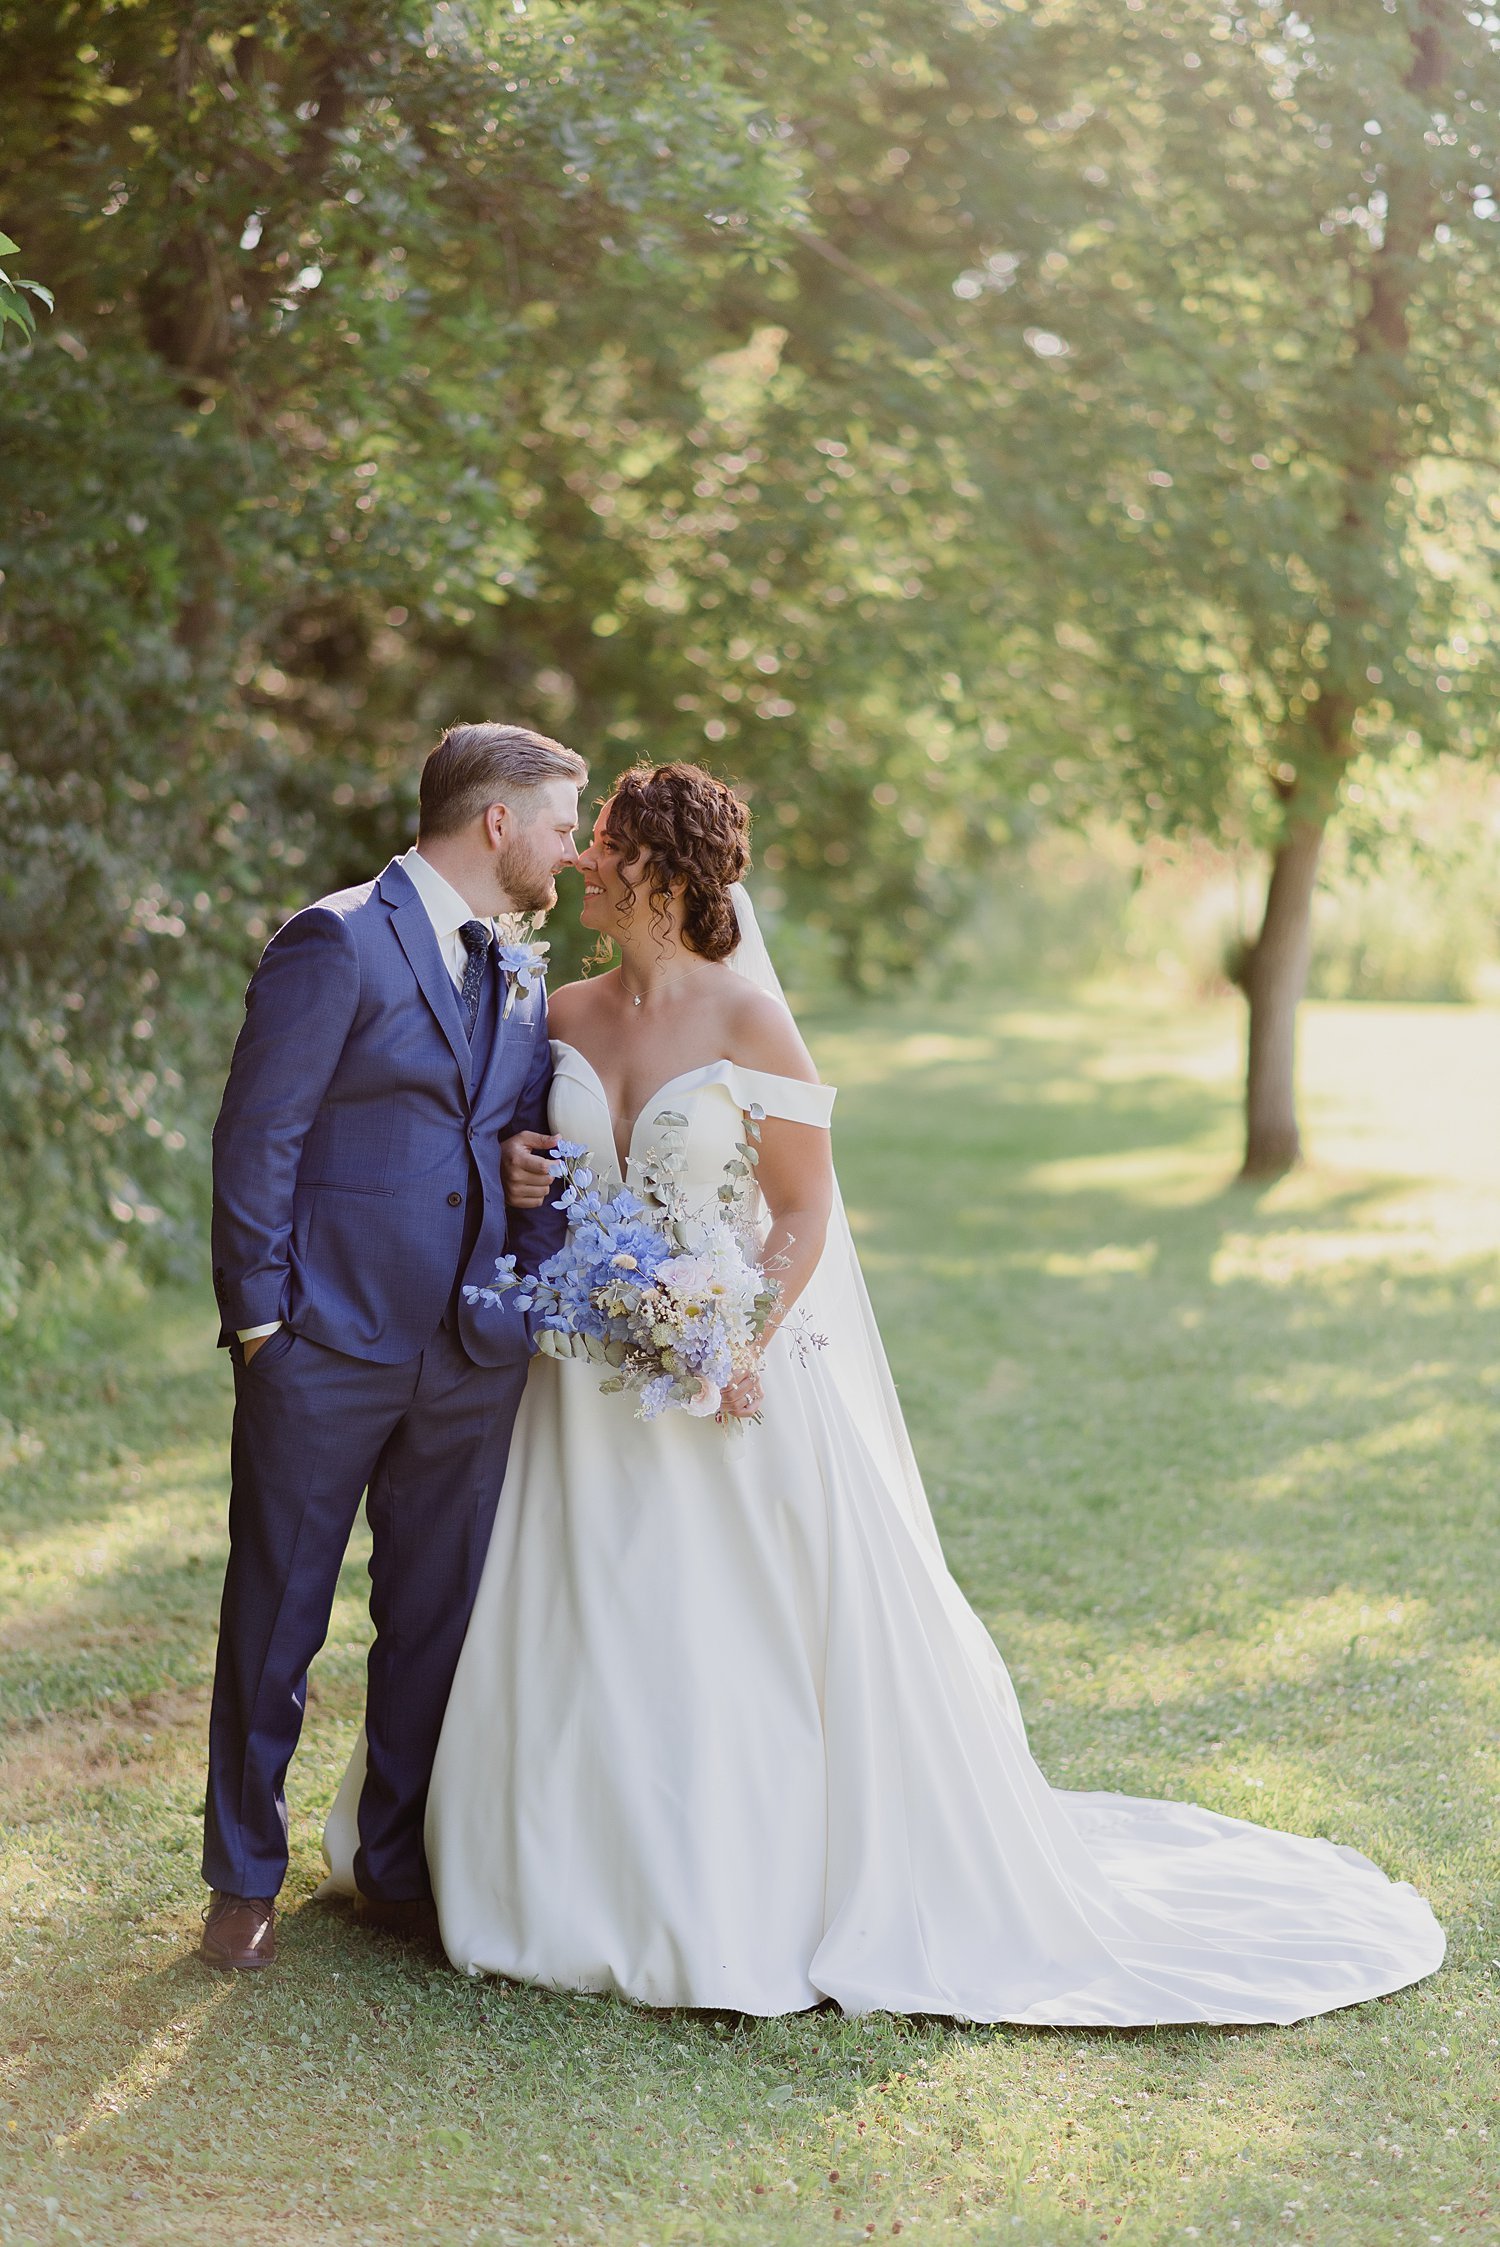 Elegant Summer Backyard Tented Wedding in Sydenham, Ontario | Prince Edward County Wedding Photographer | Holly McMurter Photographs_0065.jpg